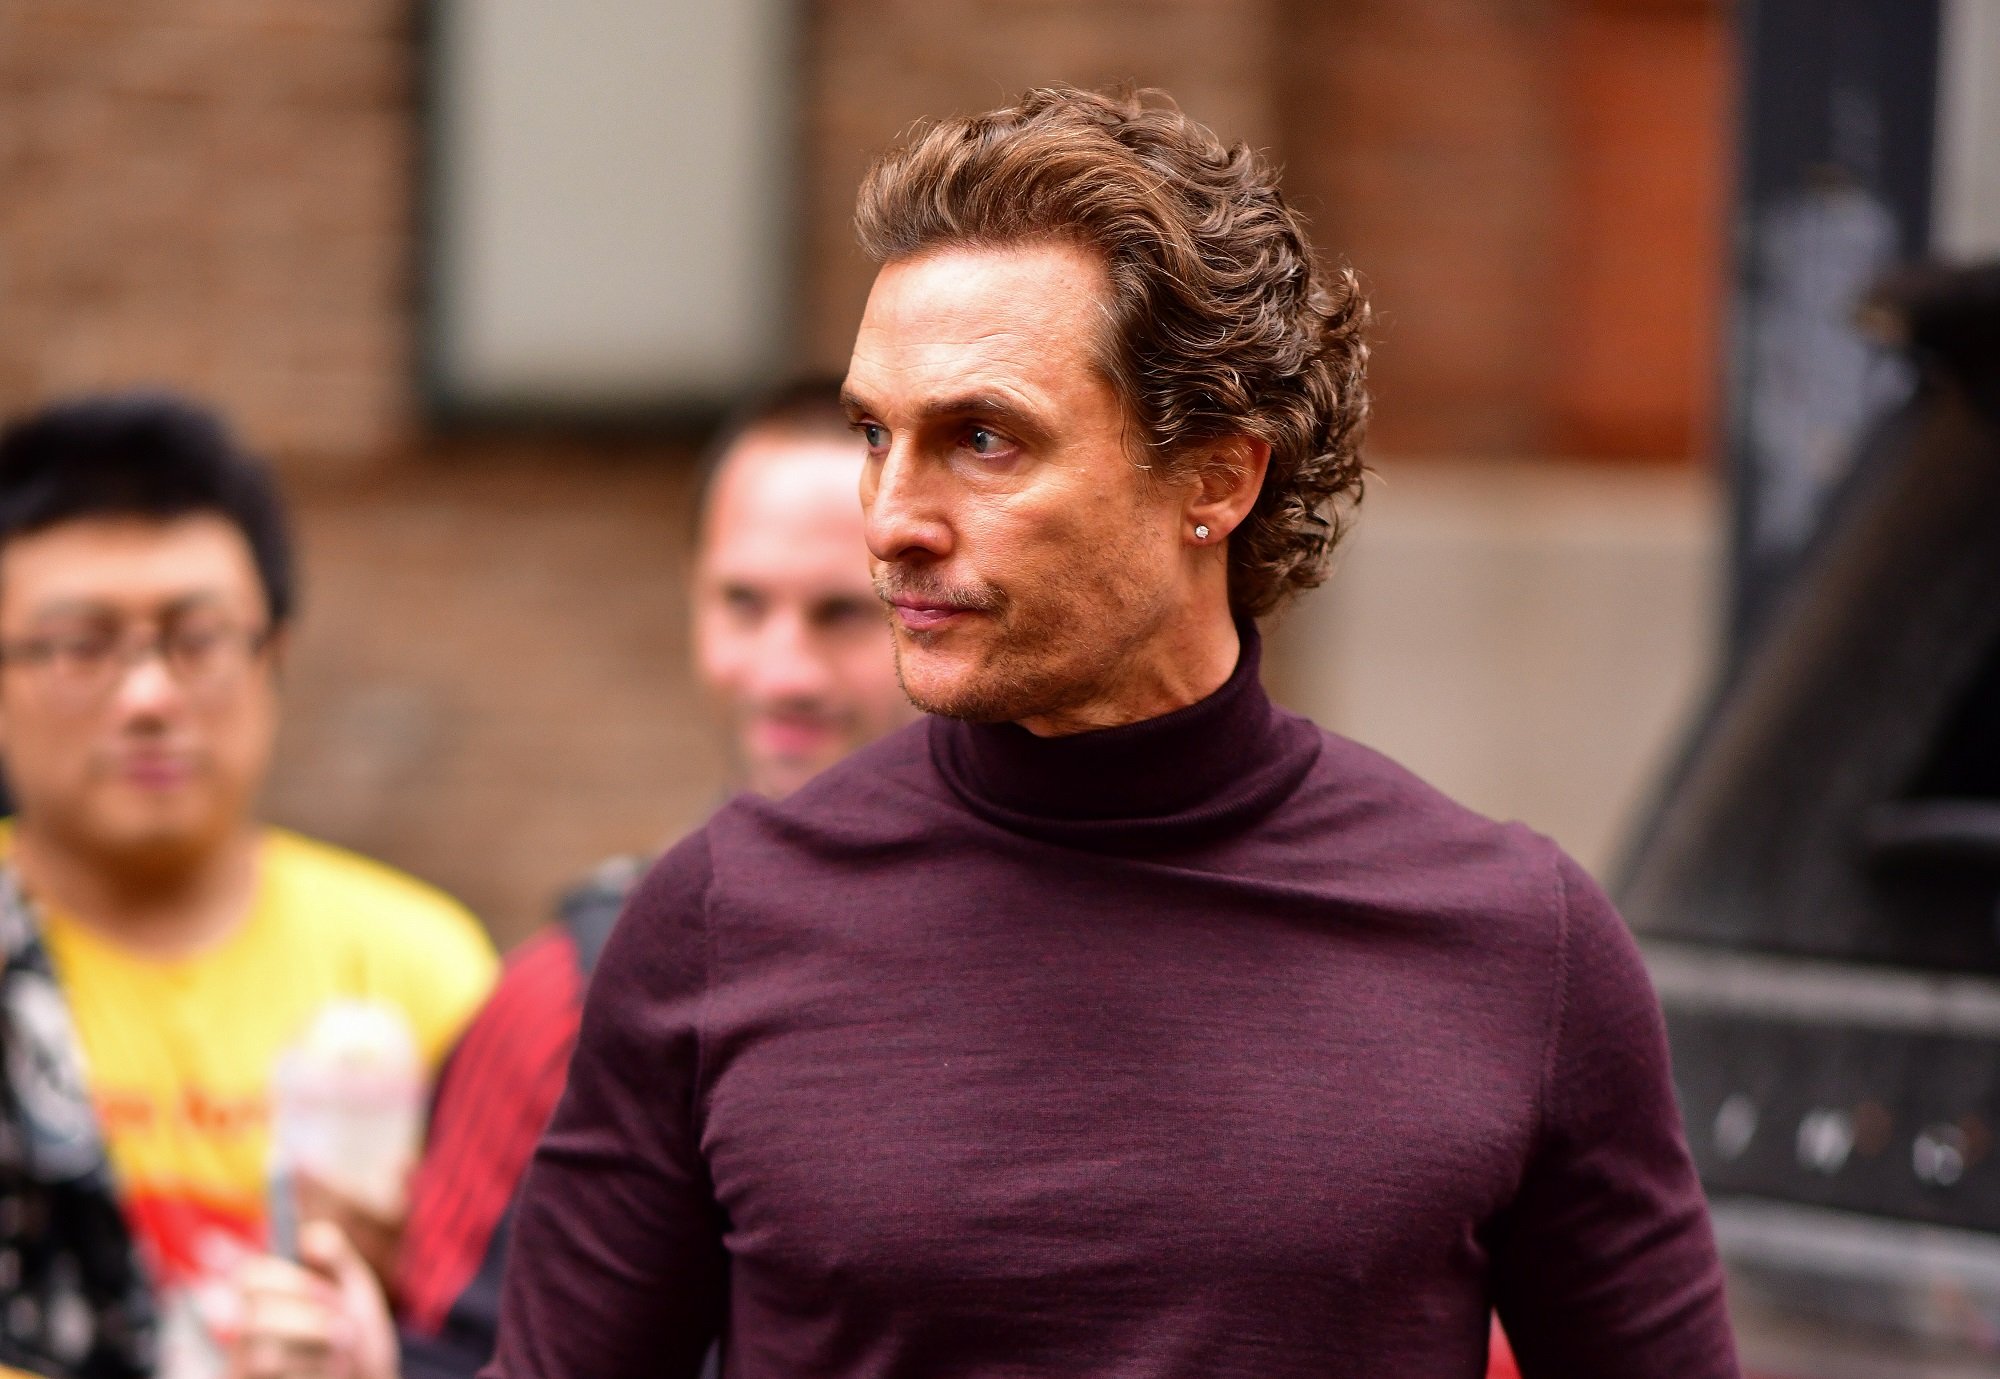 Matthew McConaughey in a purple shirt outside